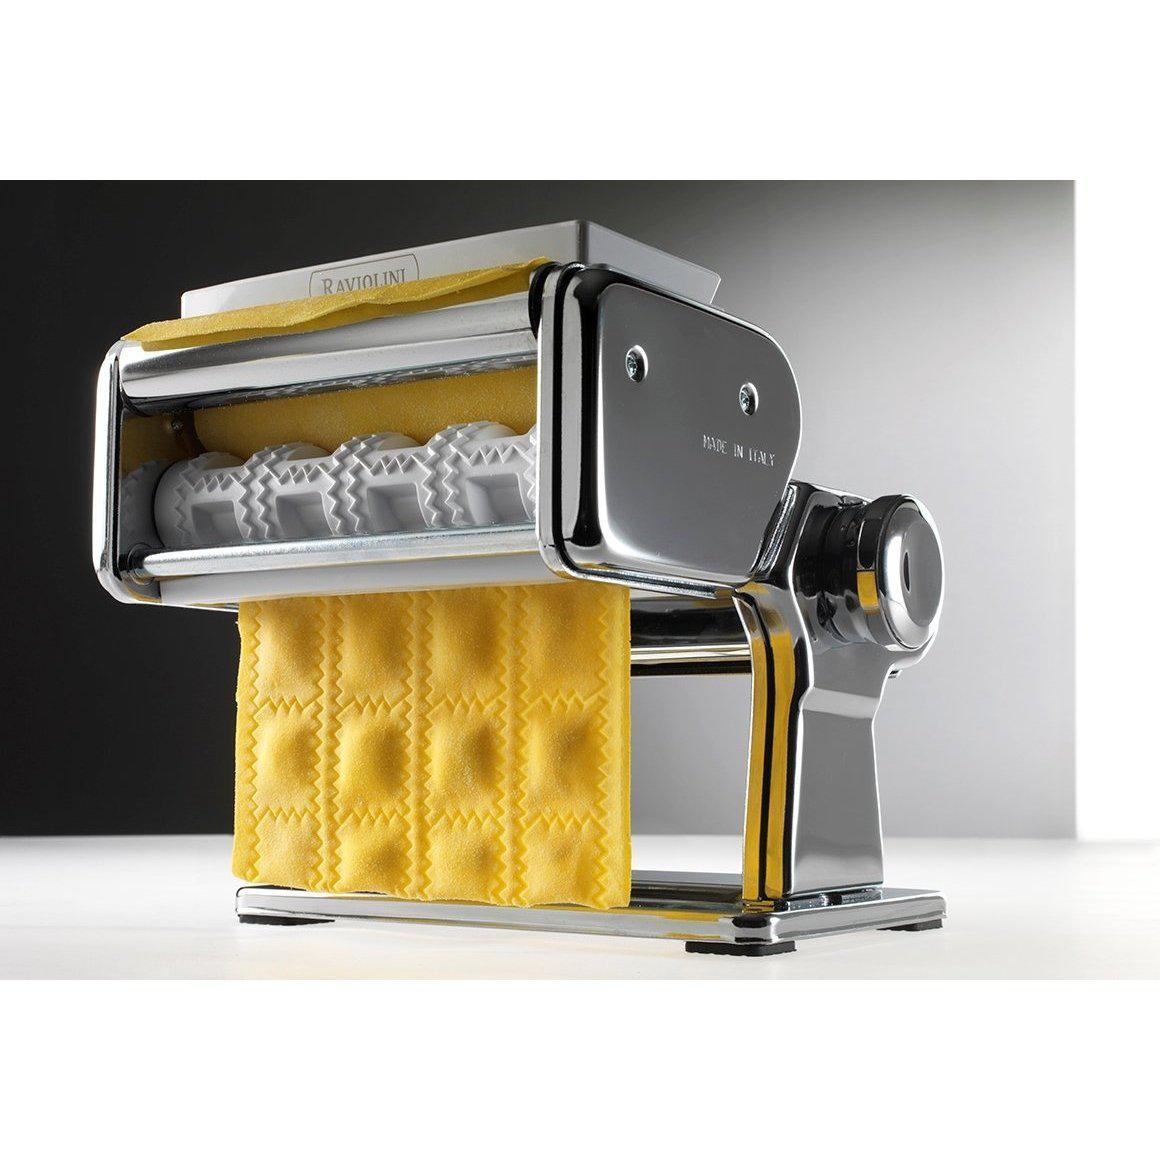 Marcato Atlas 150 Pasta Maker Attachments, Tools, Kitchen Tools